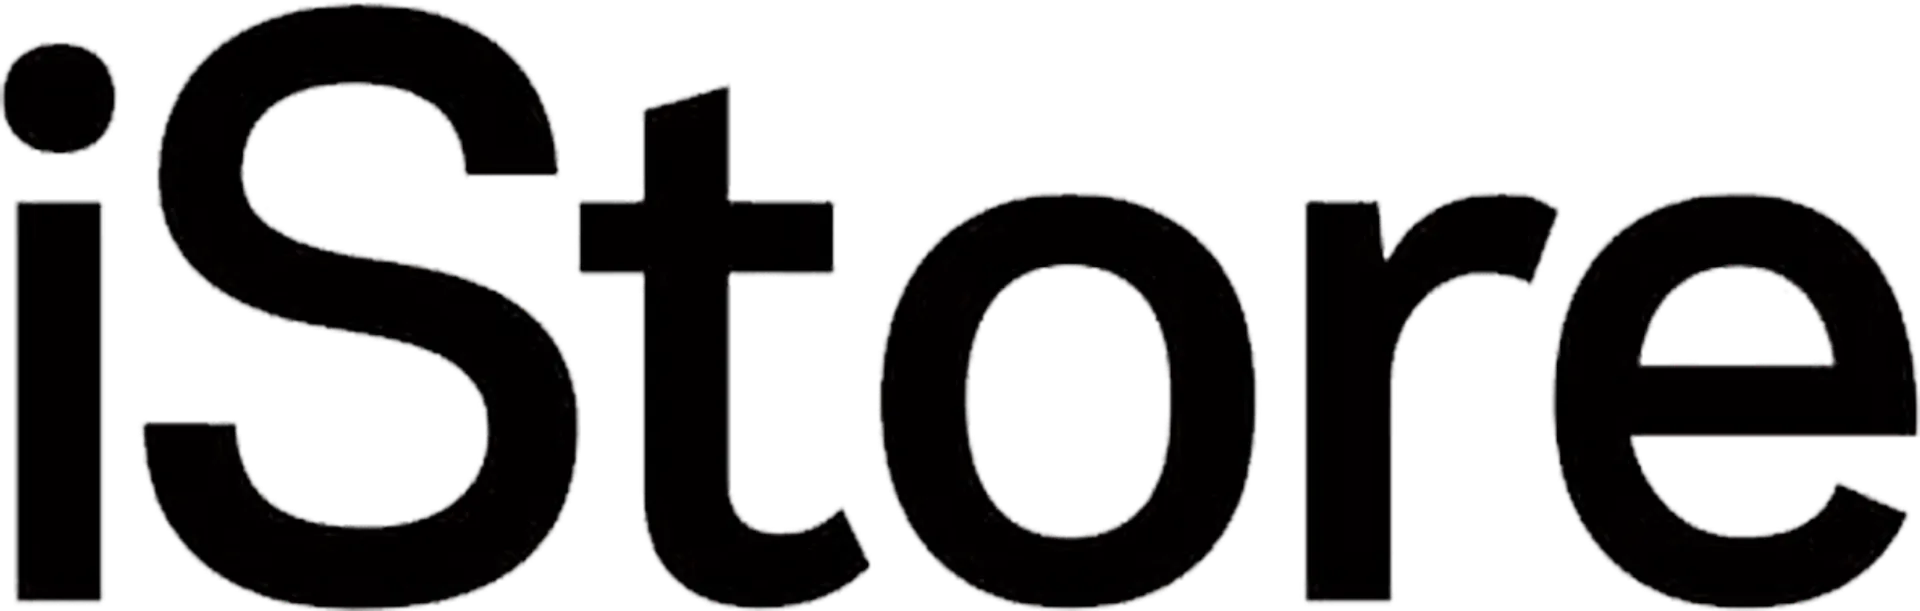 ISTORE logo